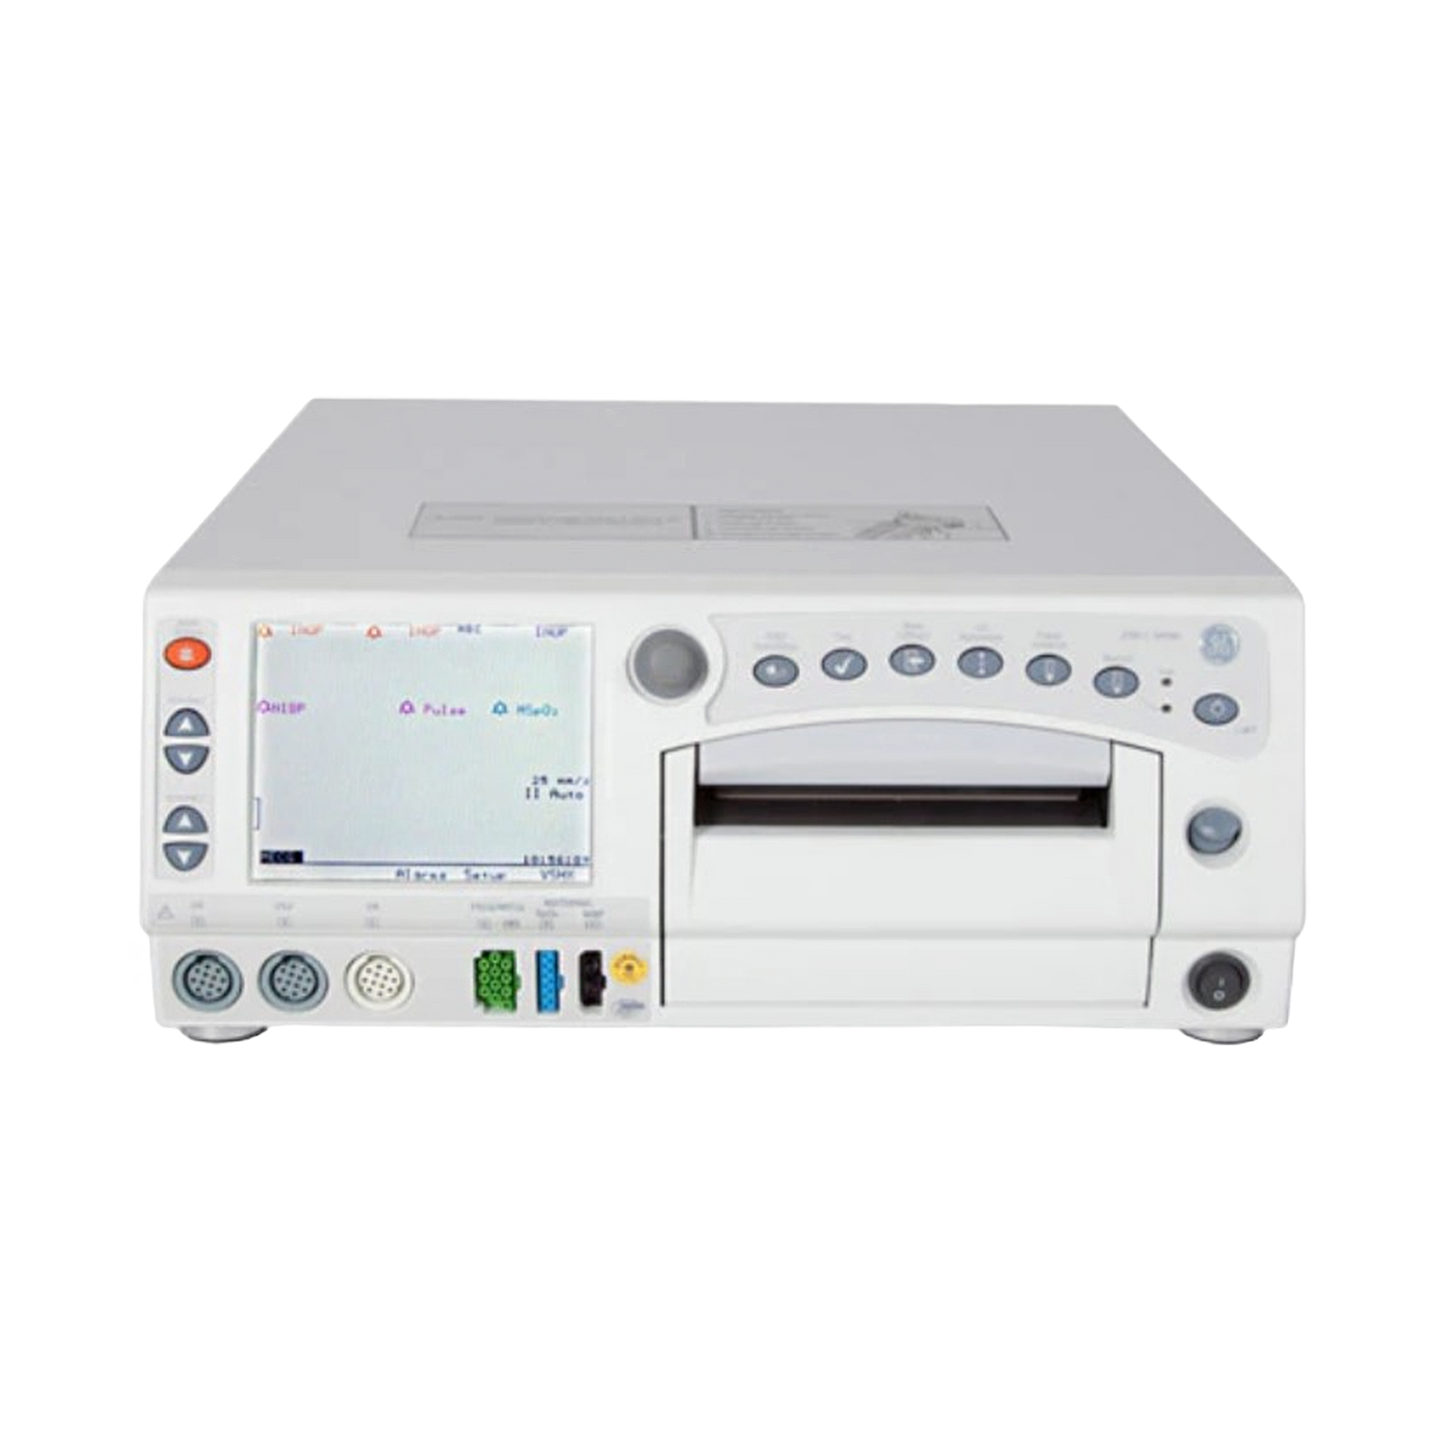 GE Corometrics 250CX Series Maternal/Fetal Monitor